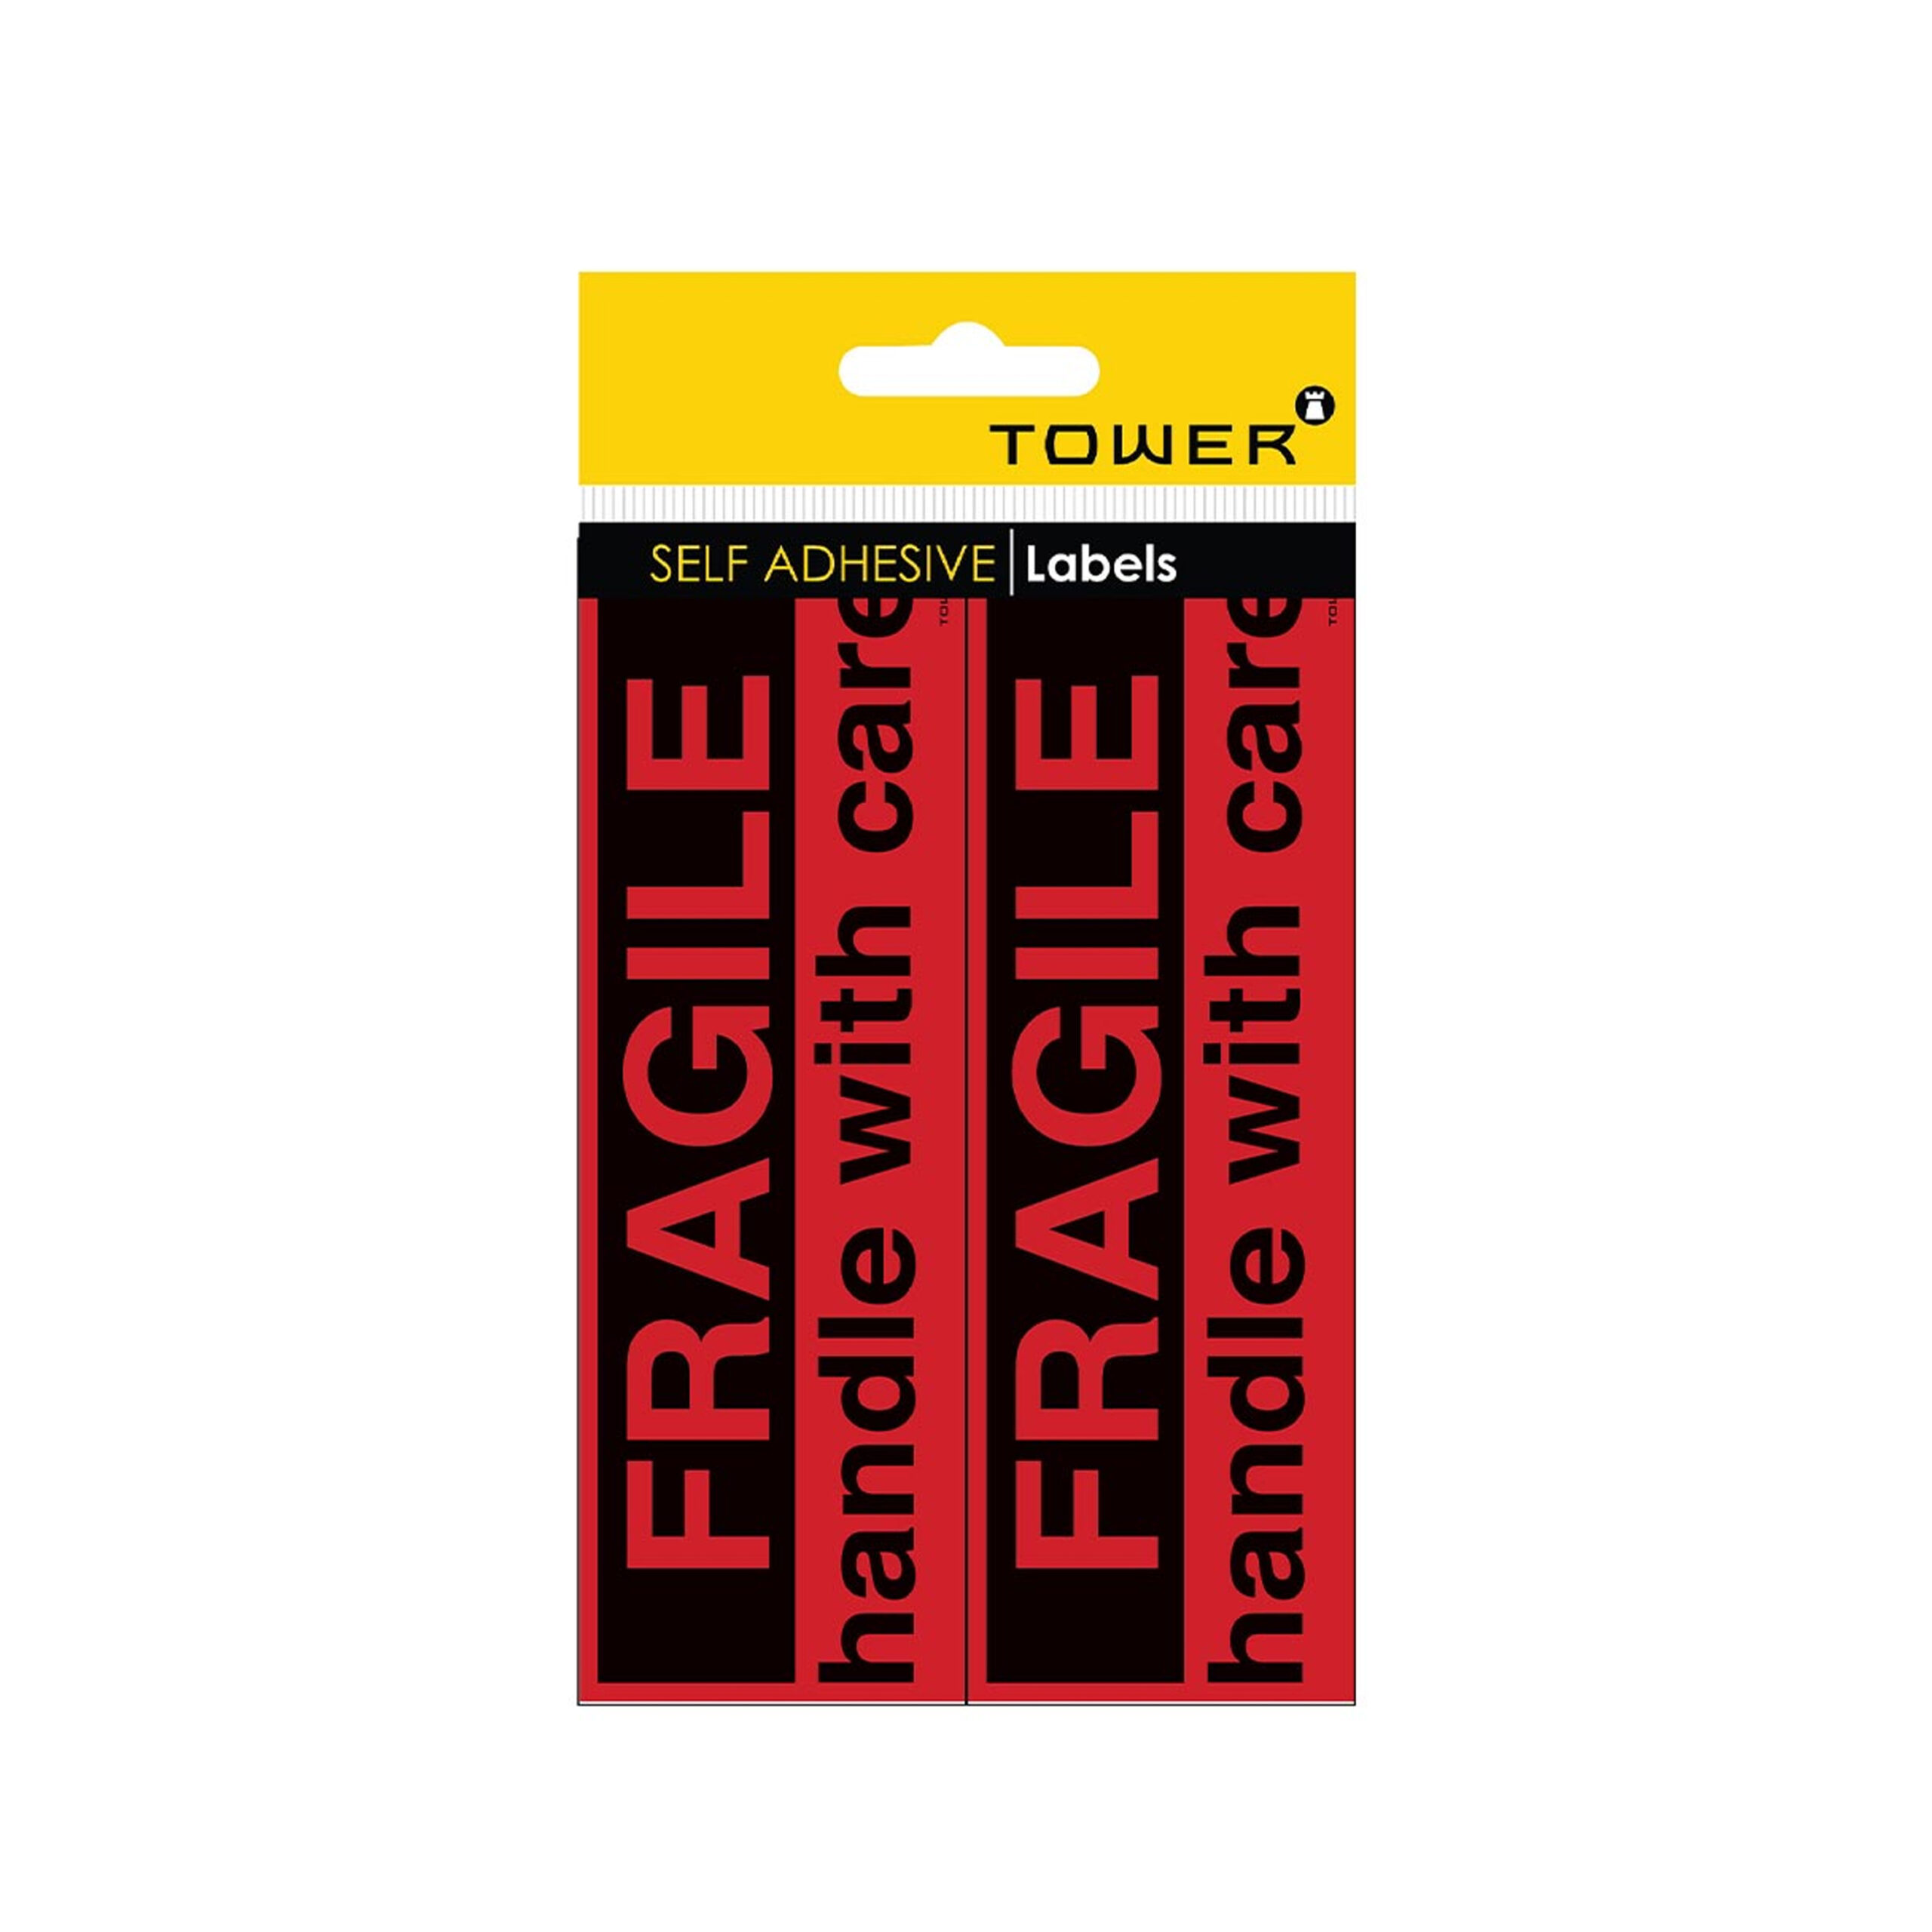 TOWER  "FRAGILE"
FLUORESCENT
LABELS 55x162mm 
(26 LABELS)